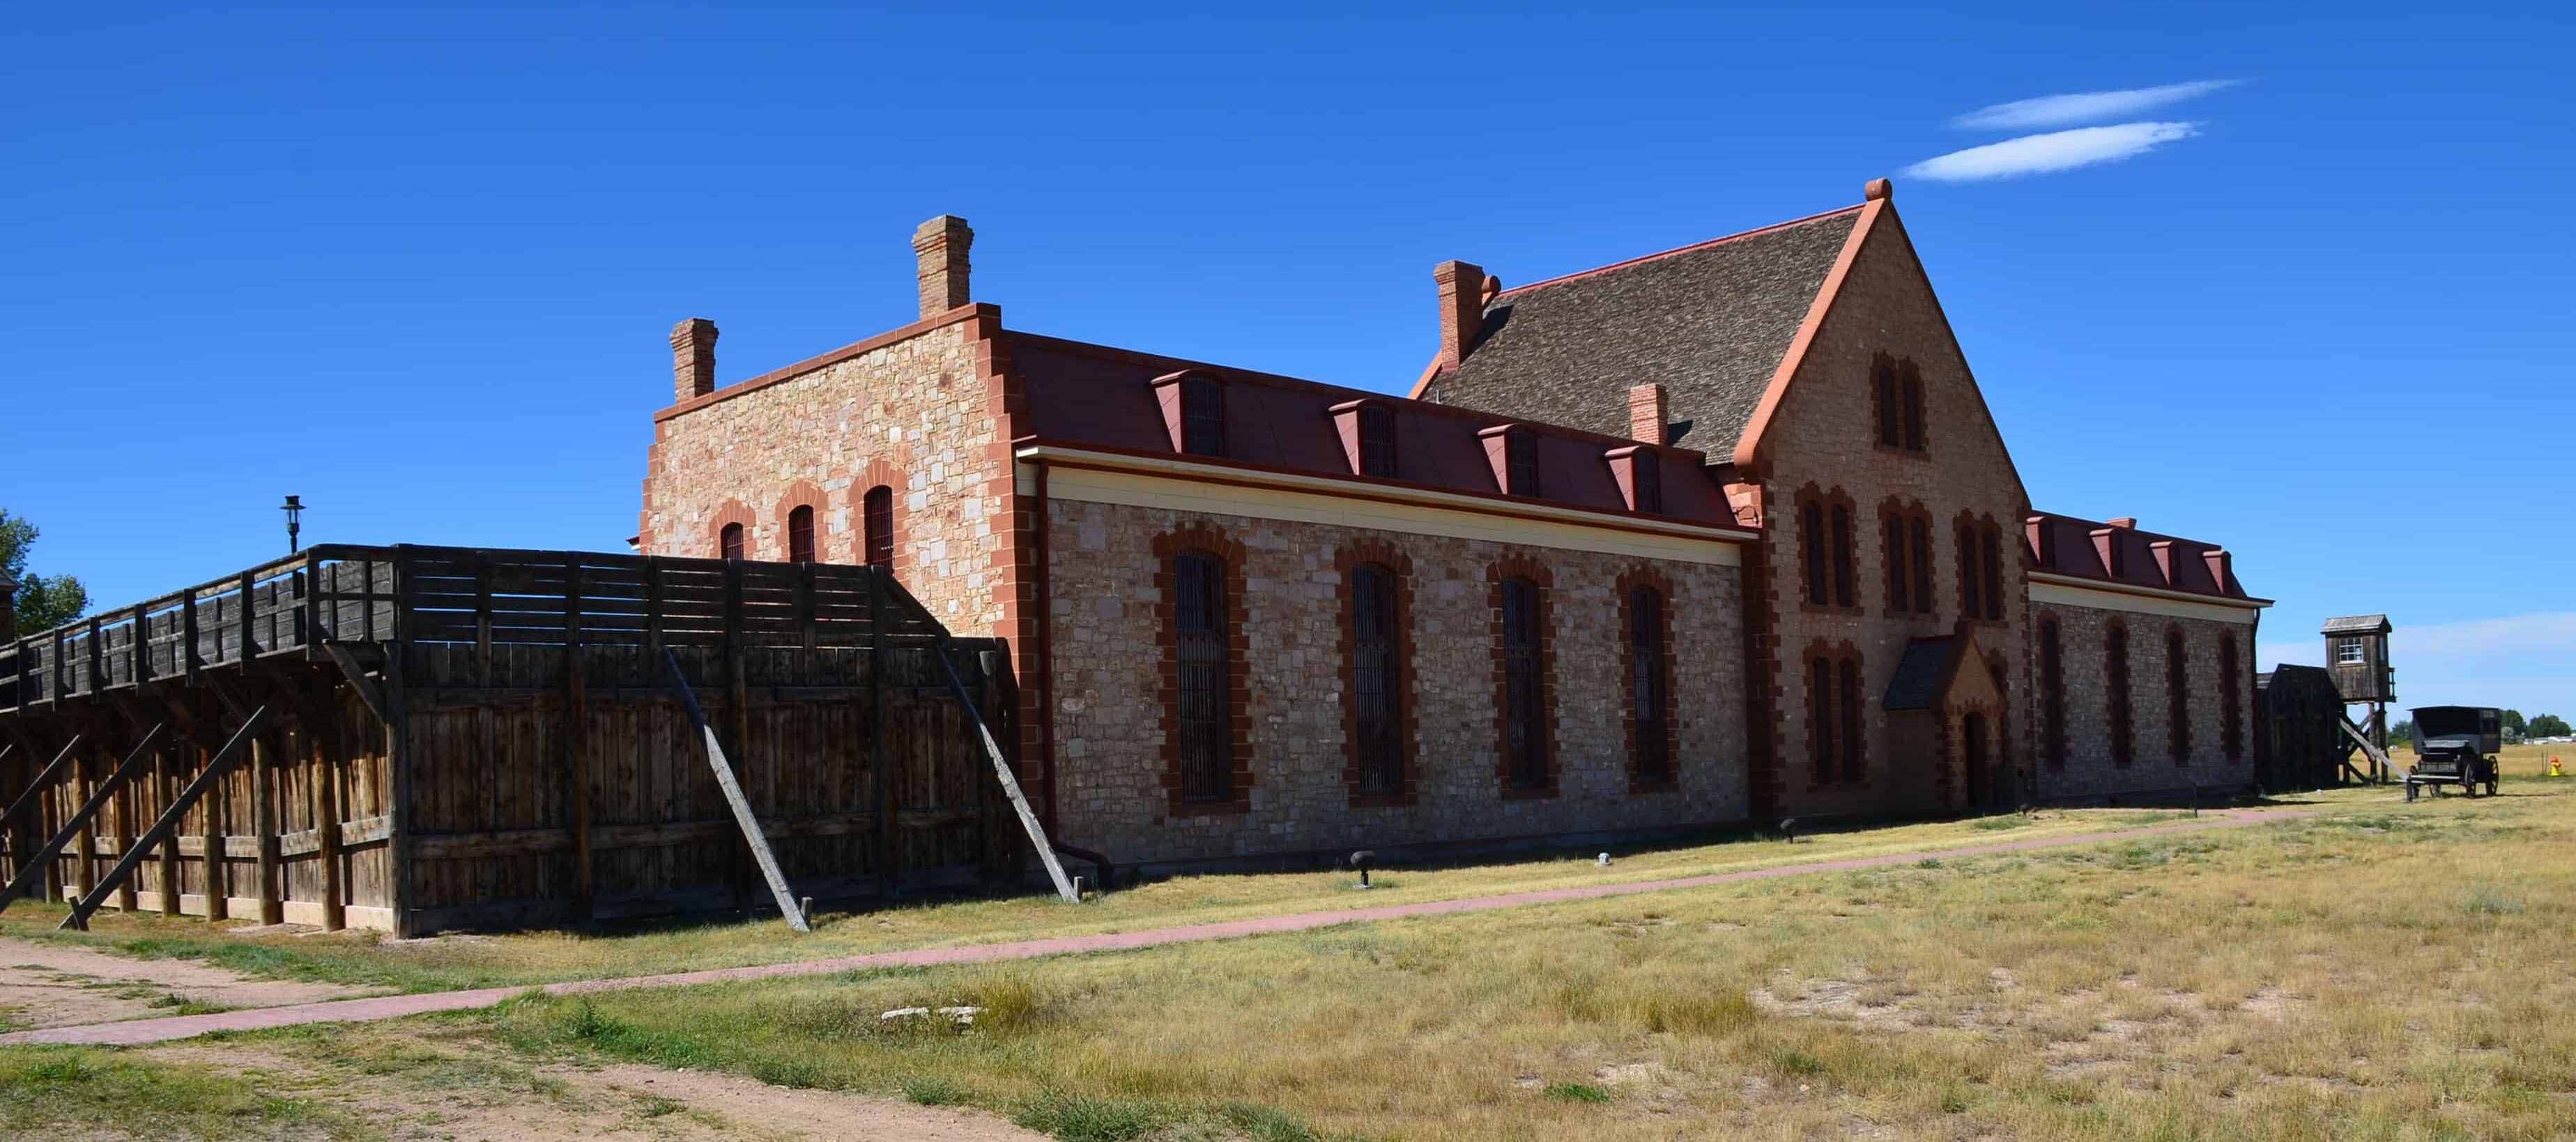 Wyoming Territorial Prison State Historic Site in Laramie